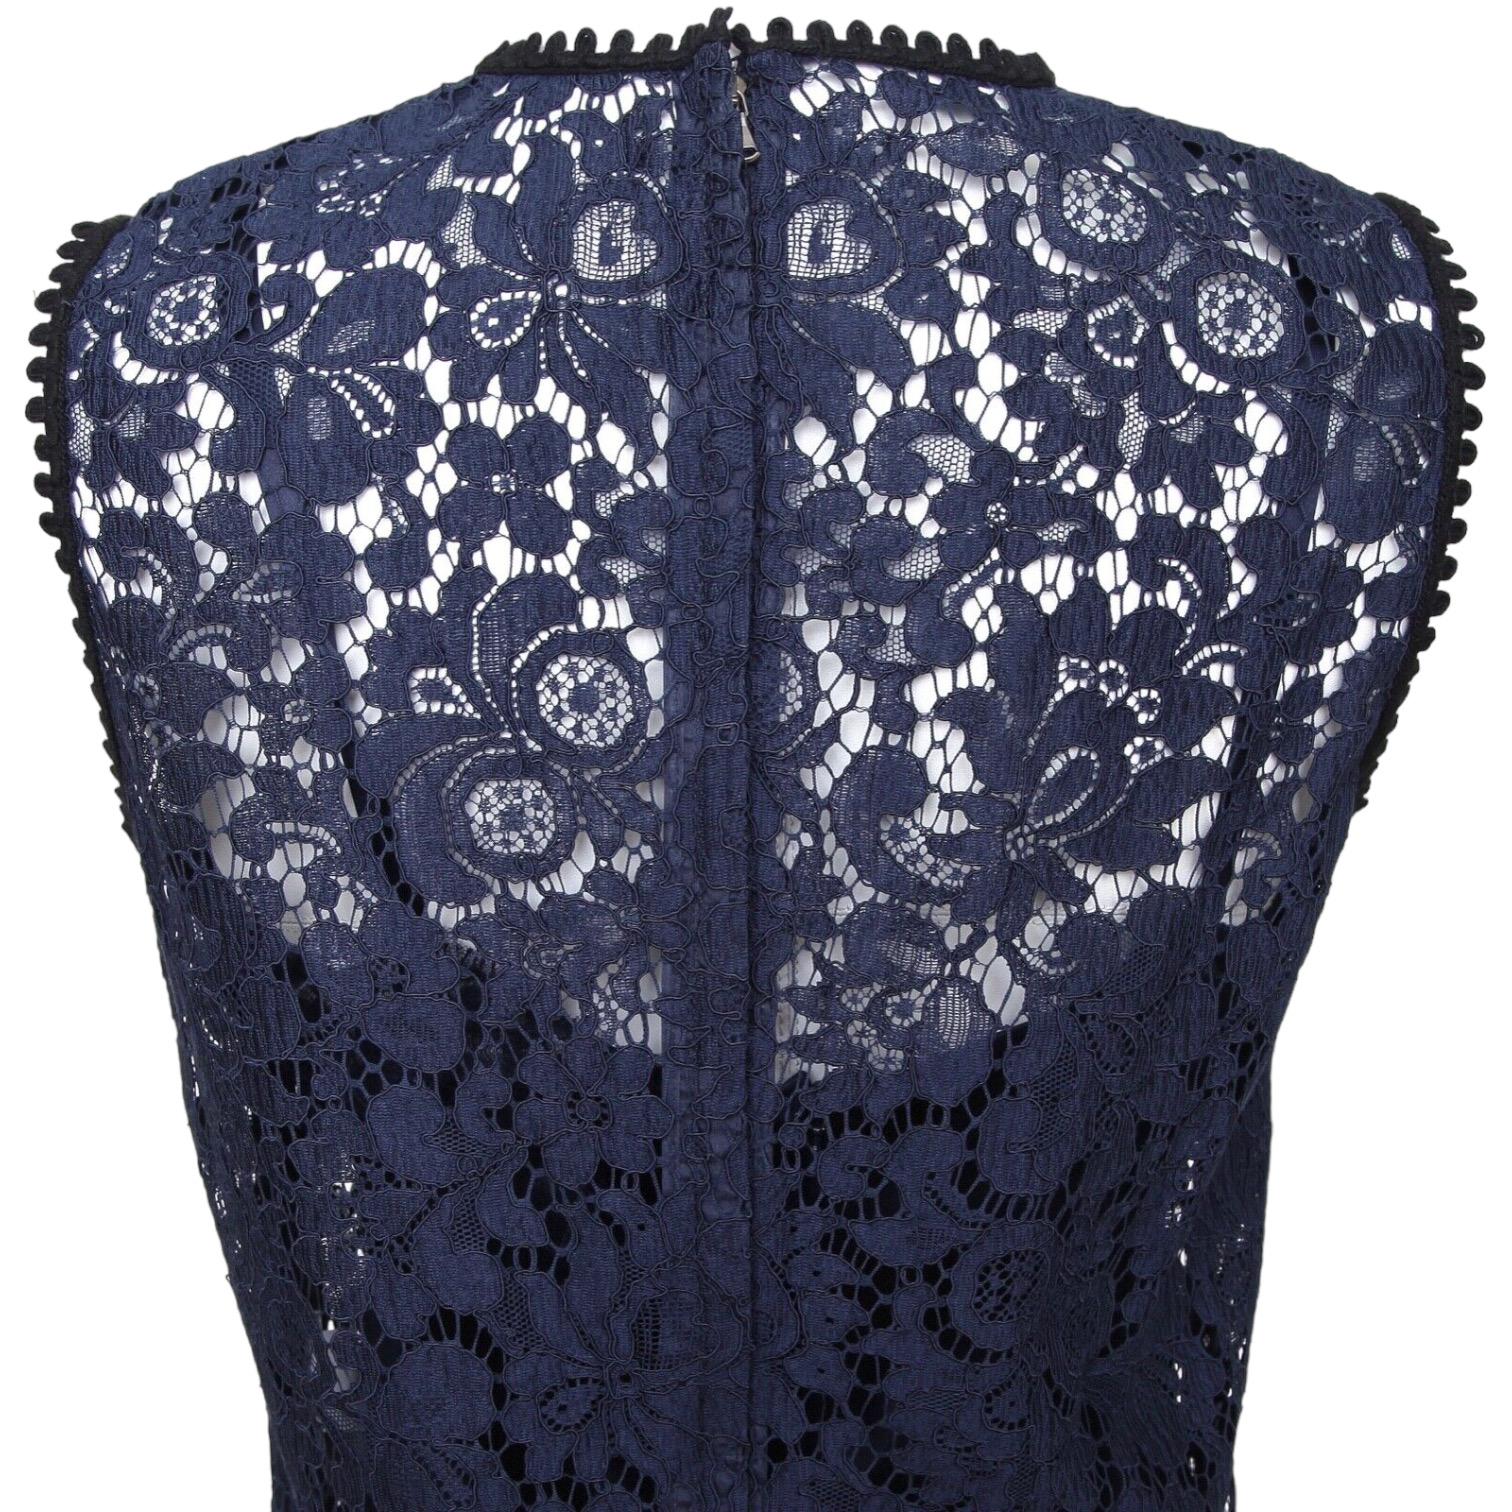 DOLCE & GABBANA Blouse Shirt Top Navy Blue Black Sleeveless Lace Sz 40 Ret $1495 For Sale 1